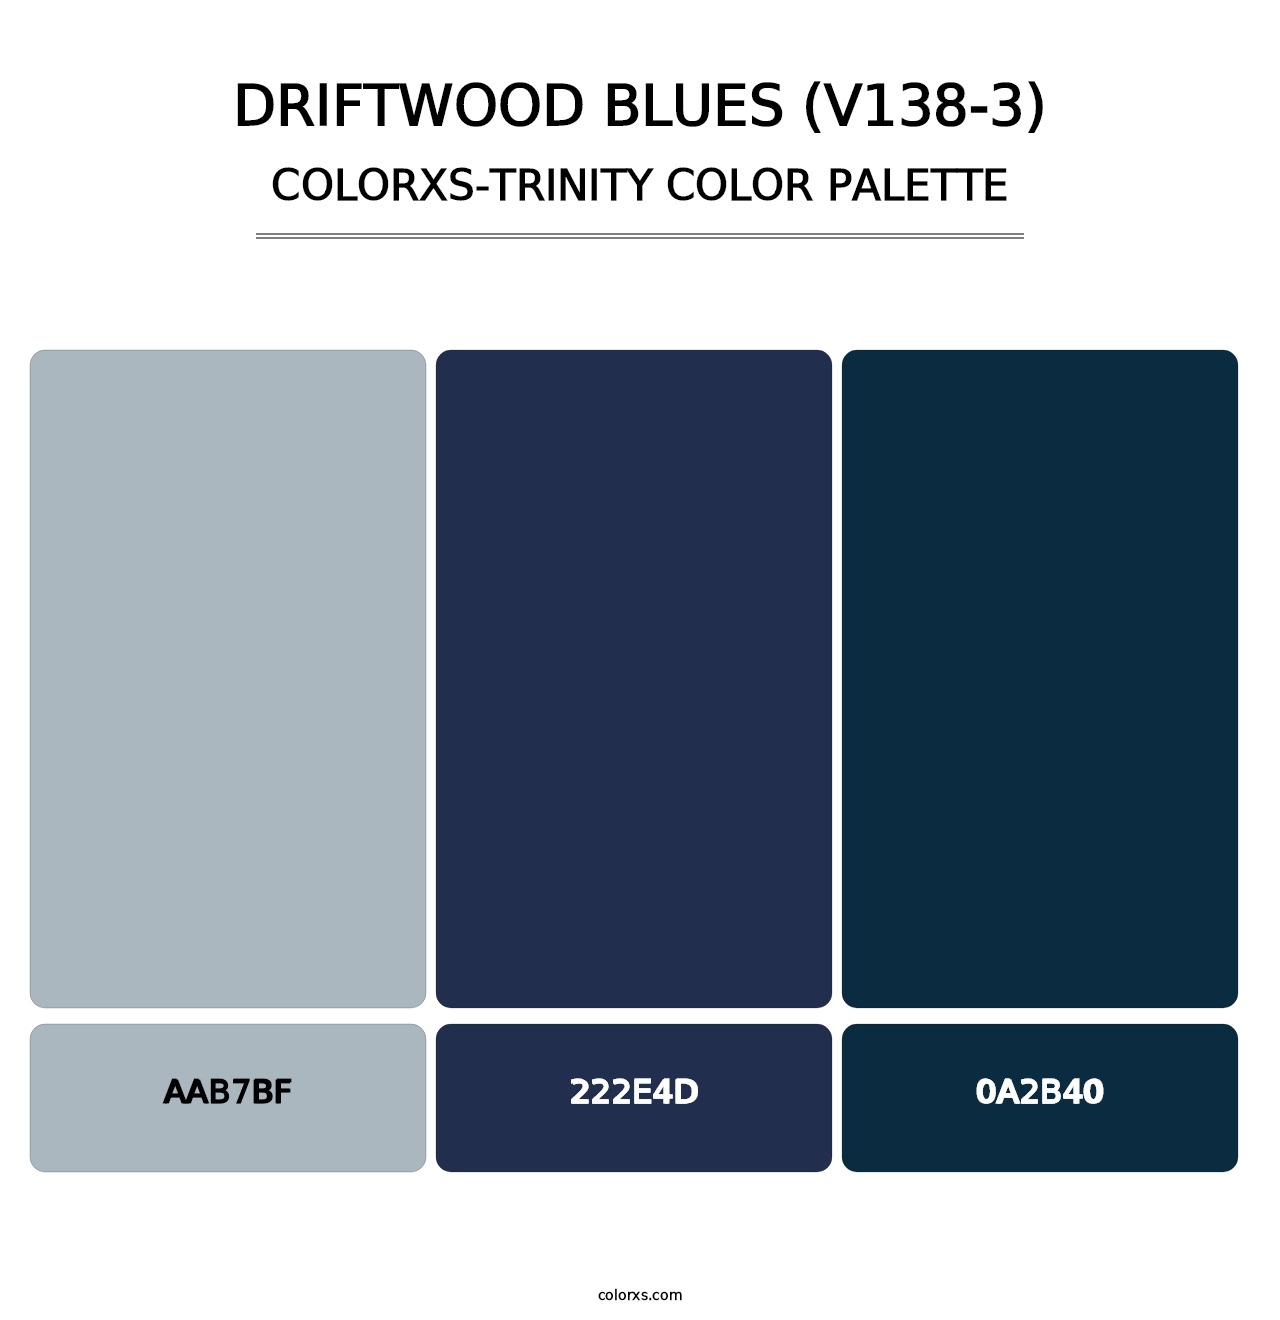 Driftwood Blues (V138-3) - Colorxs Trinity Palette